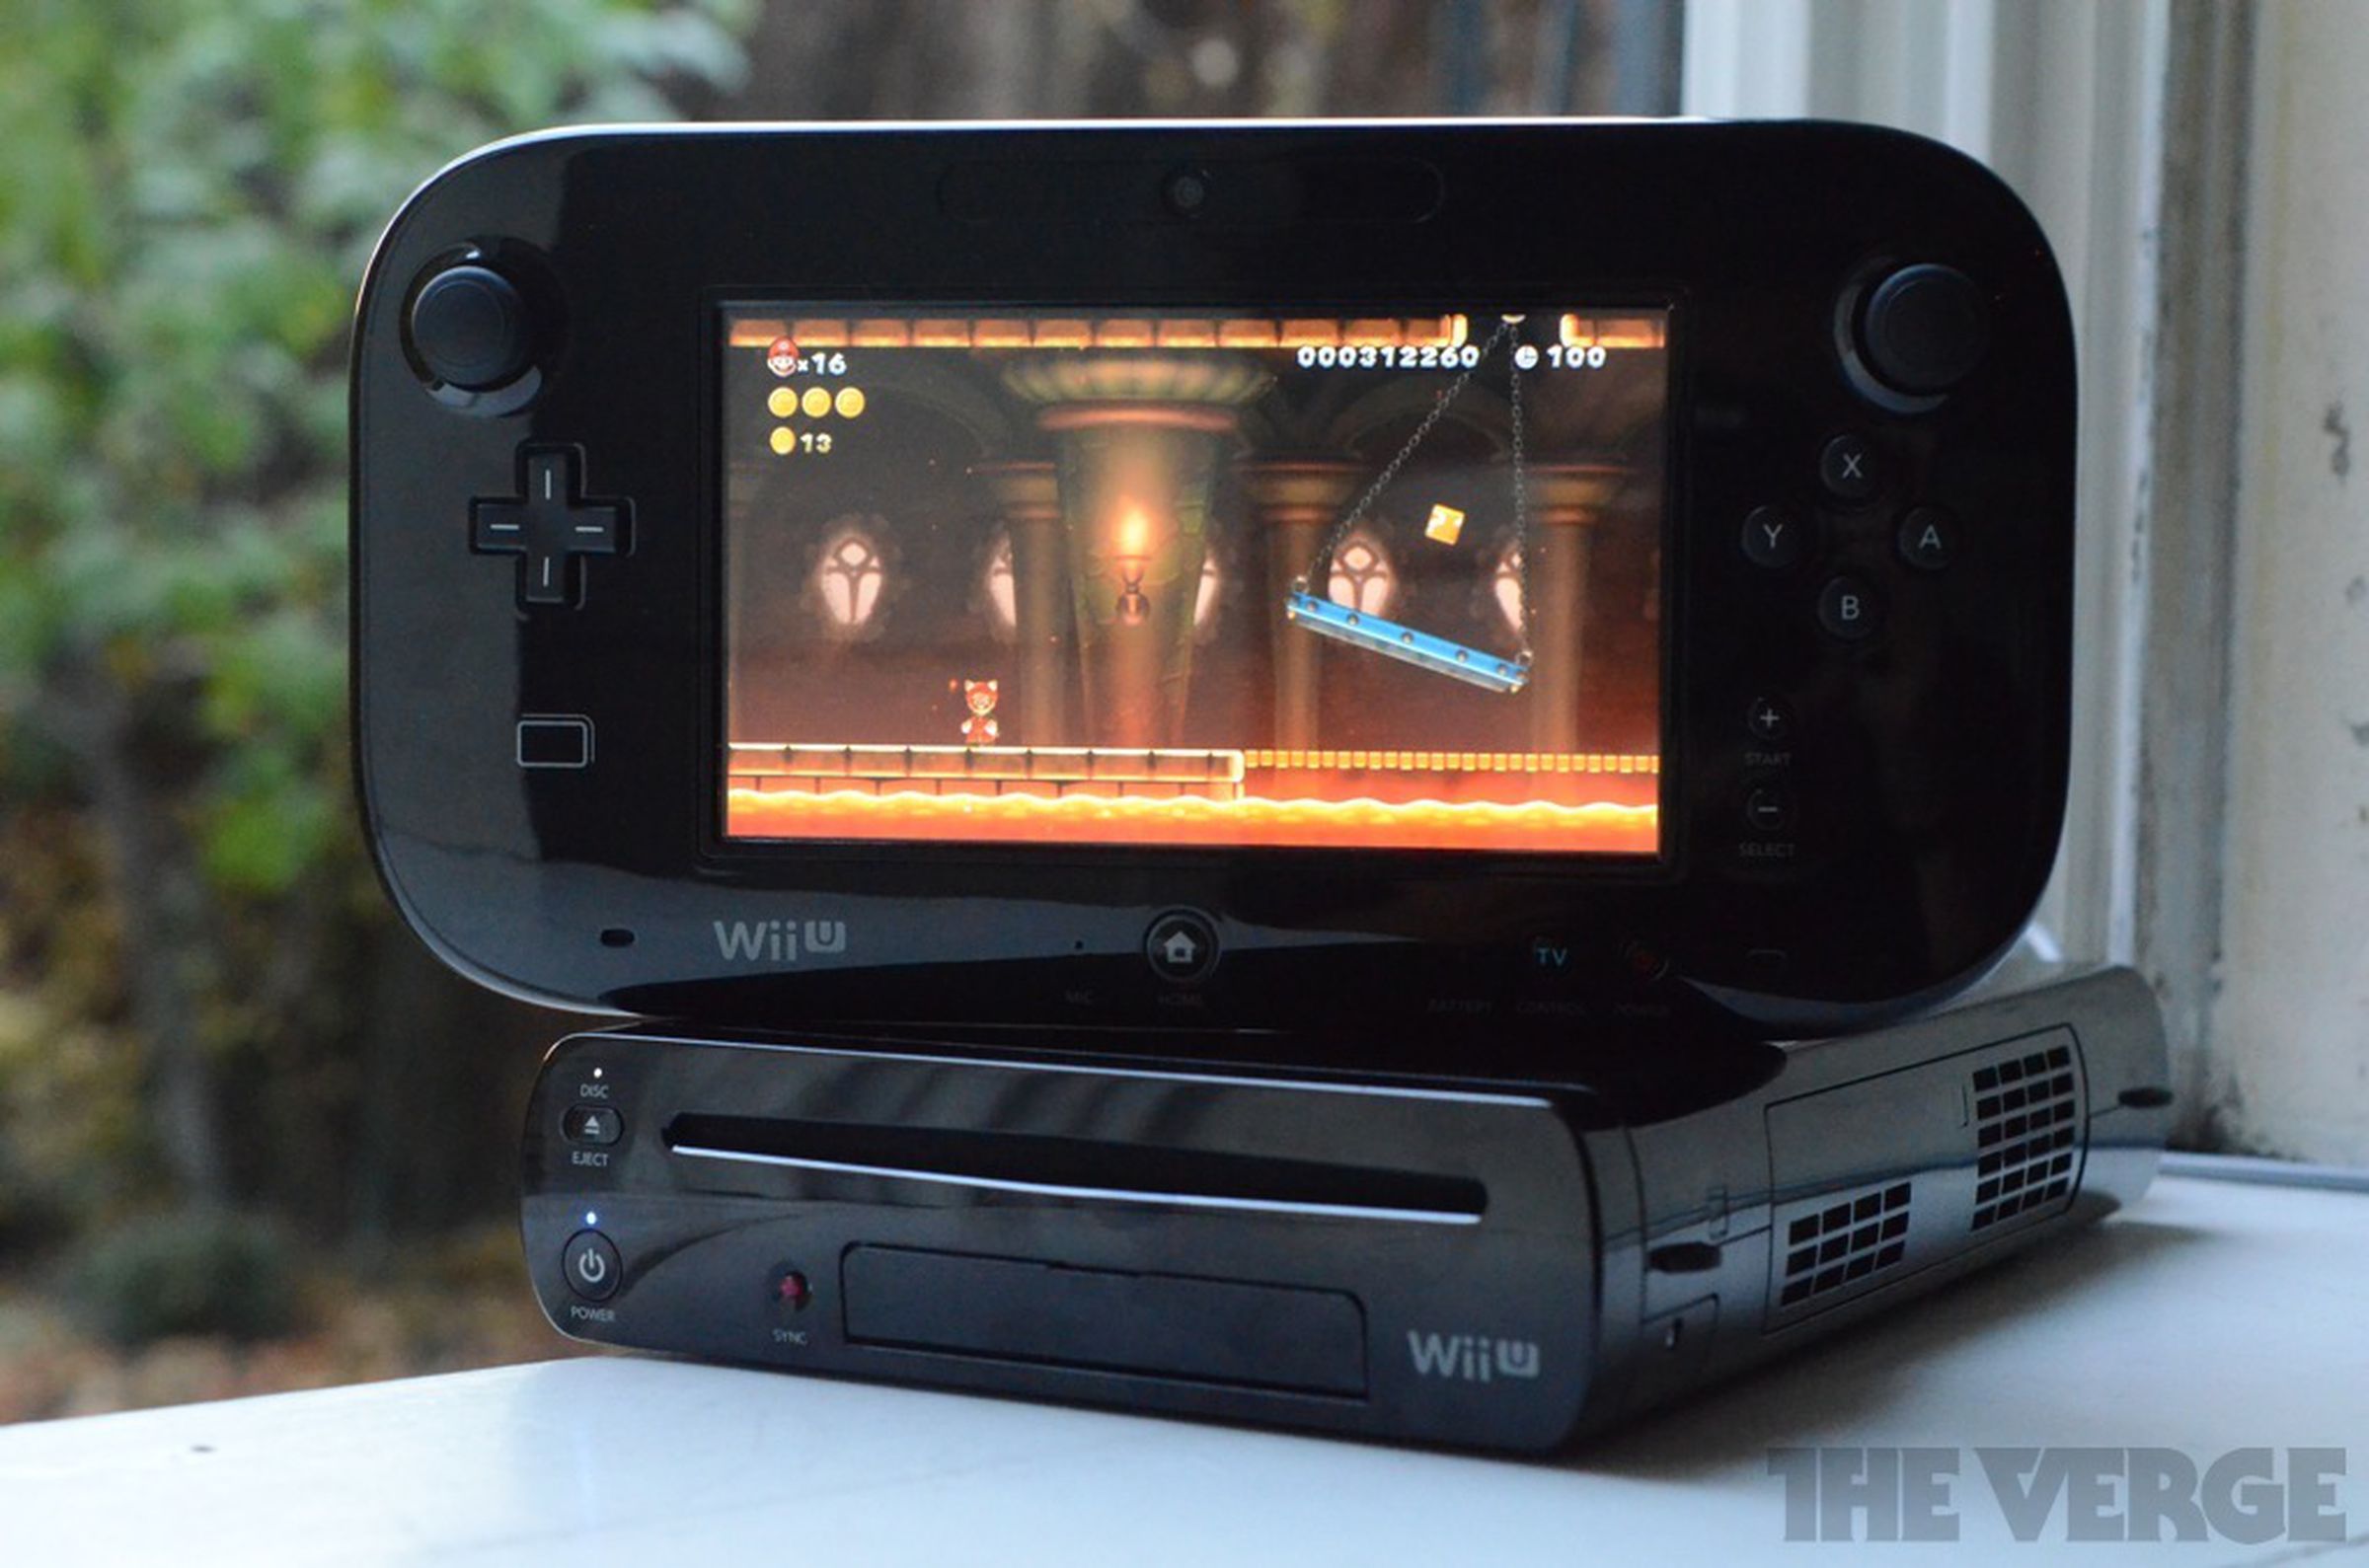 Gallery Photo: Nintendo Wii U hands-on pictures